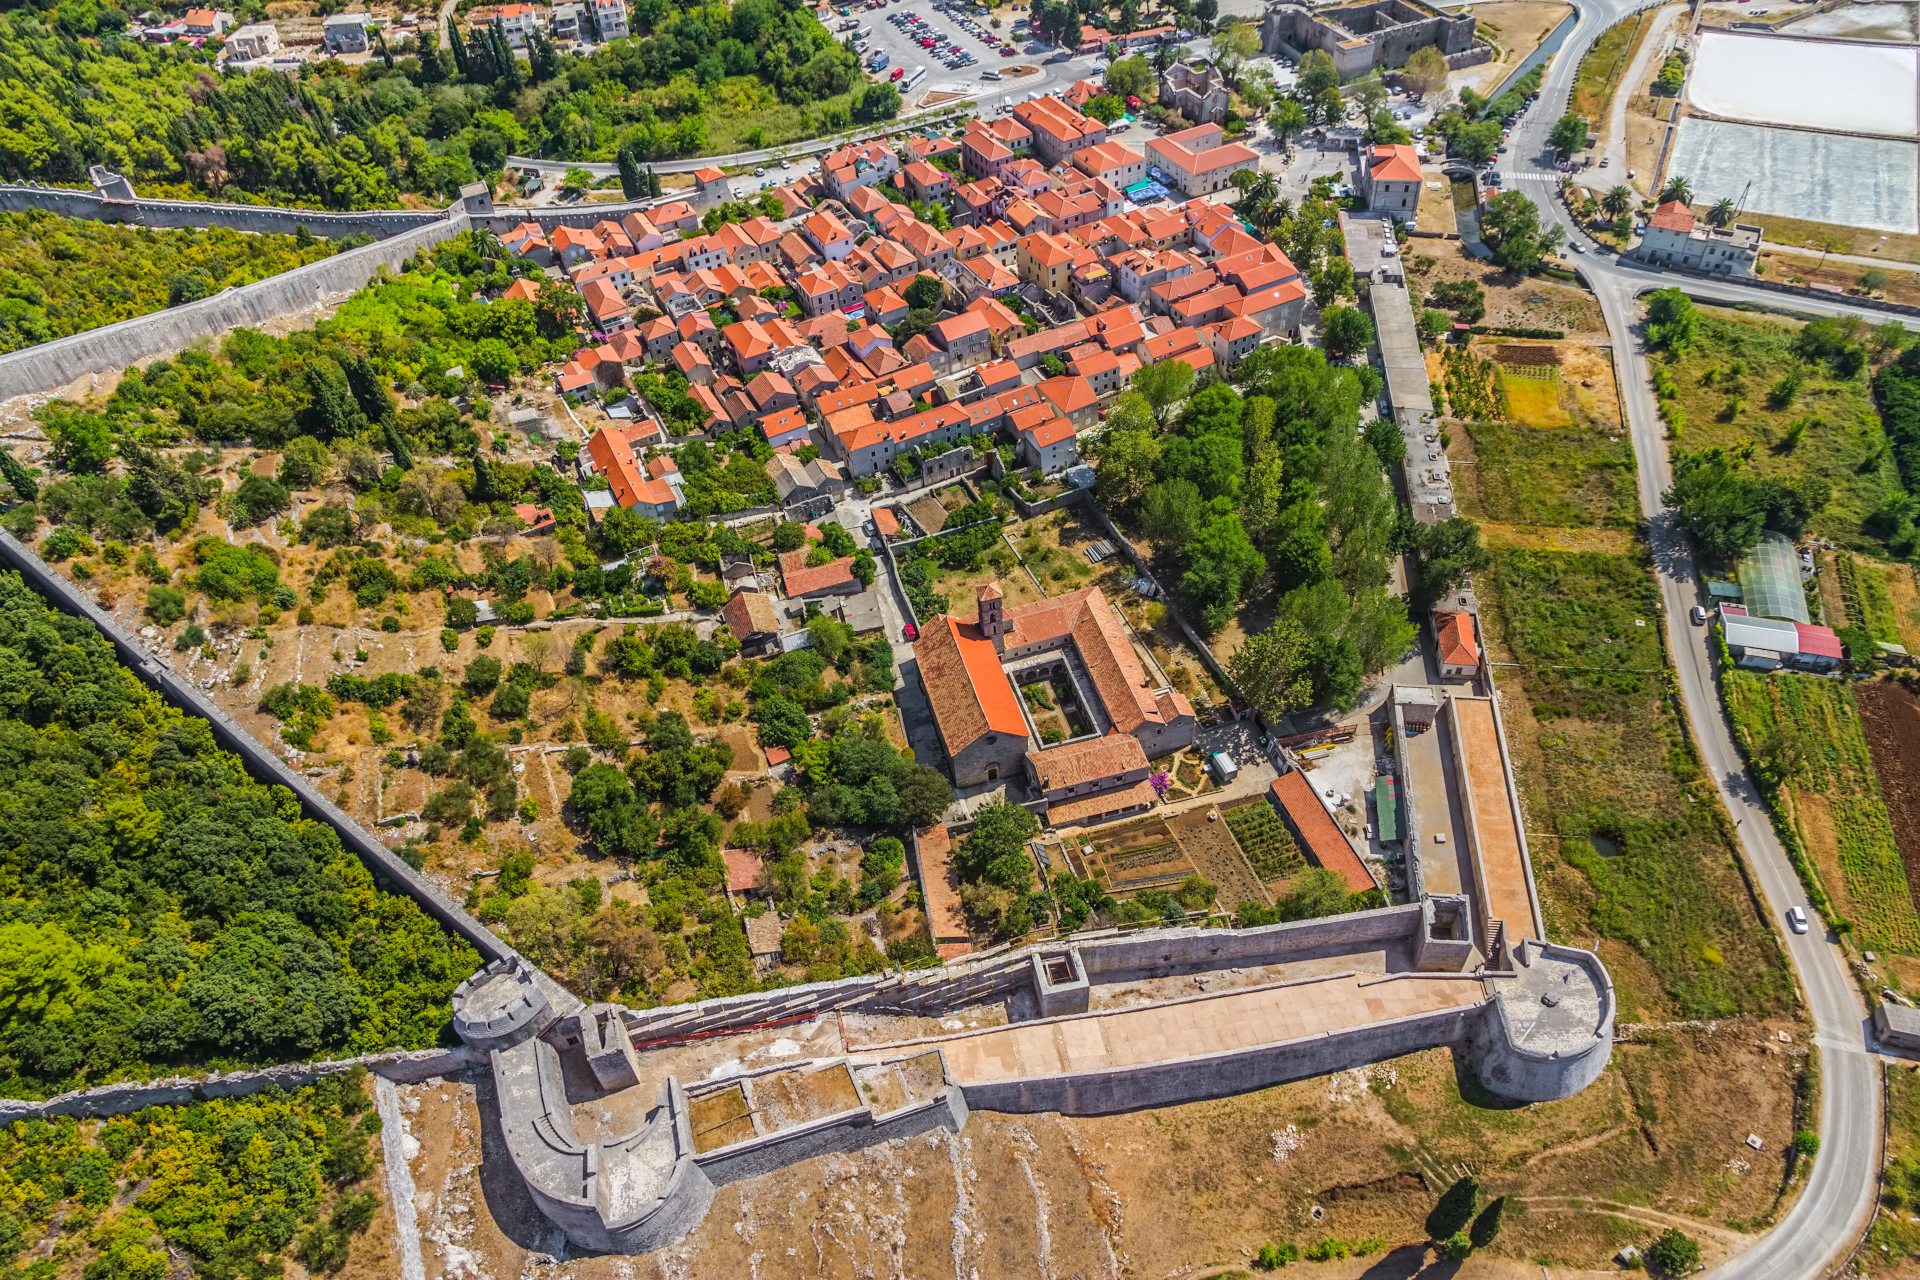 7-Hour Peljesac Peninsula Wine Tour from Dubrovnik 